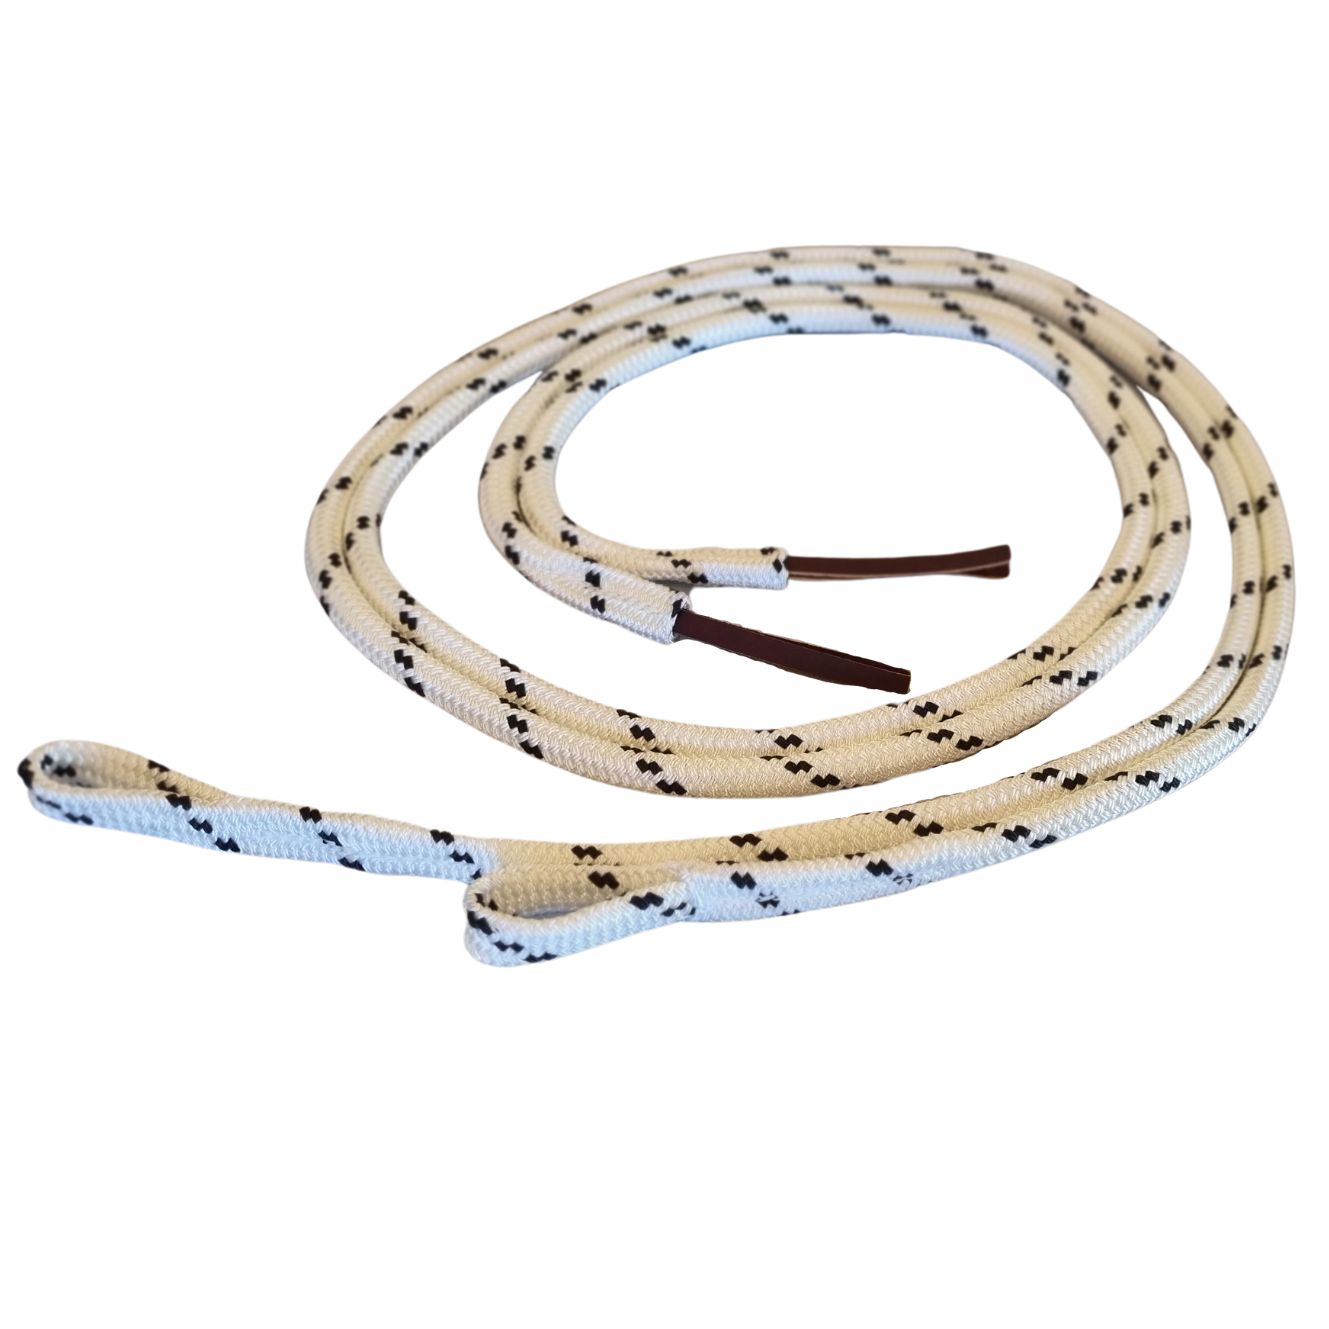 Rope Split Reins - Simon Martin Whips & Leathercraft